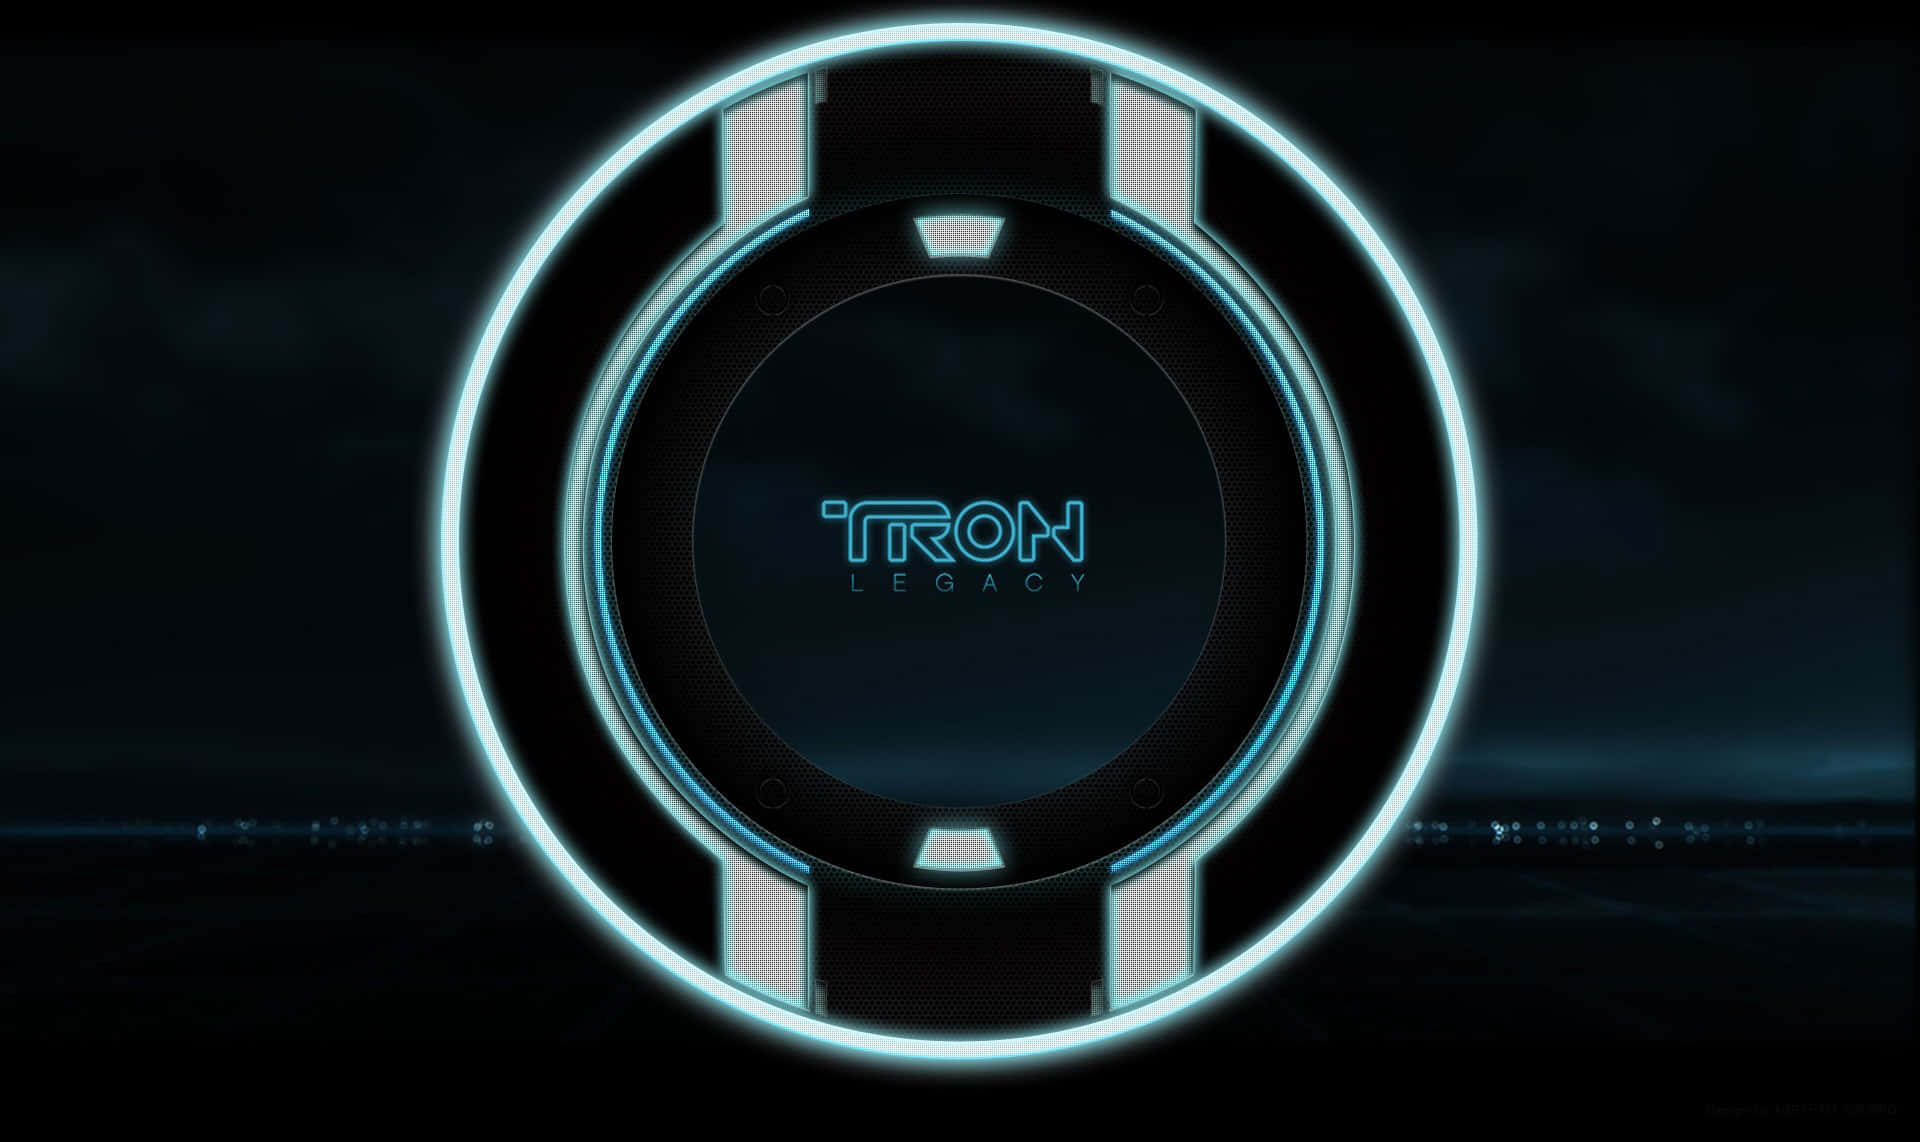 Tron Background